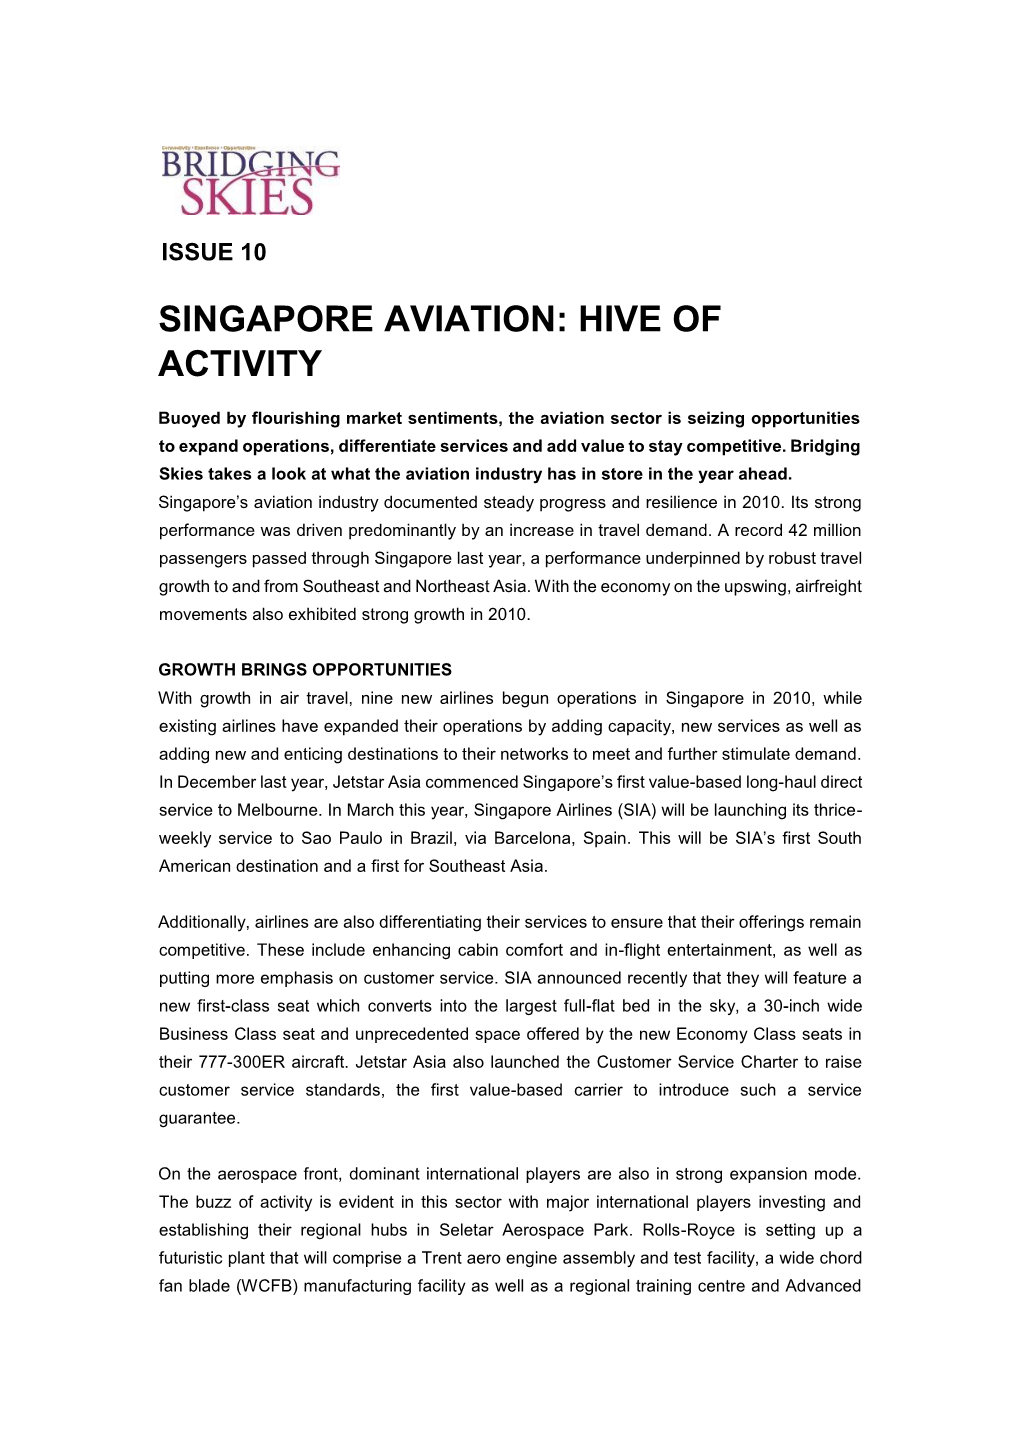 Singapore Aviation: Hive of Activity